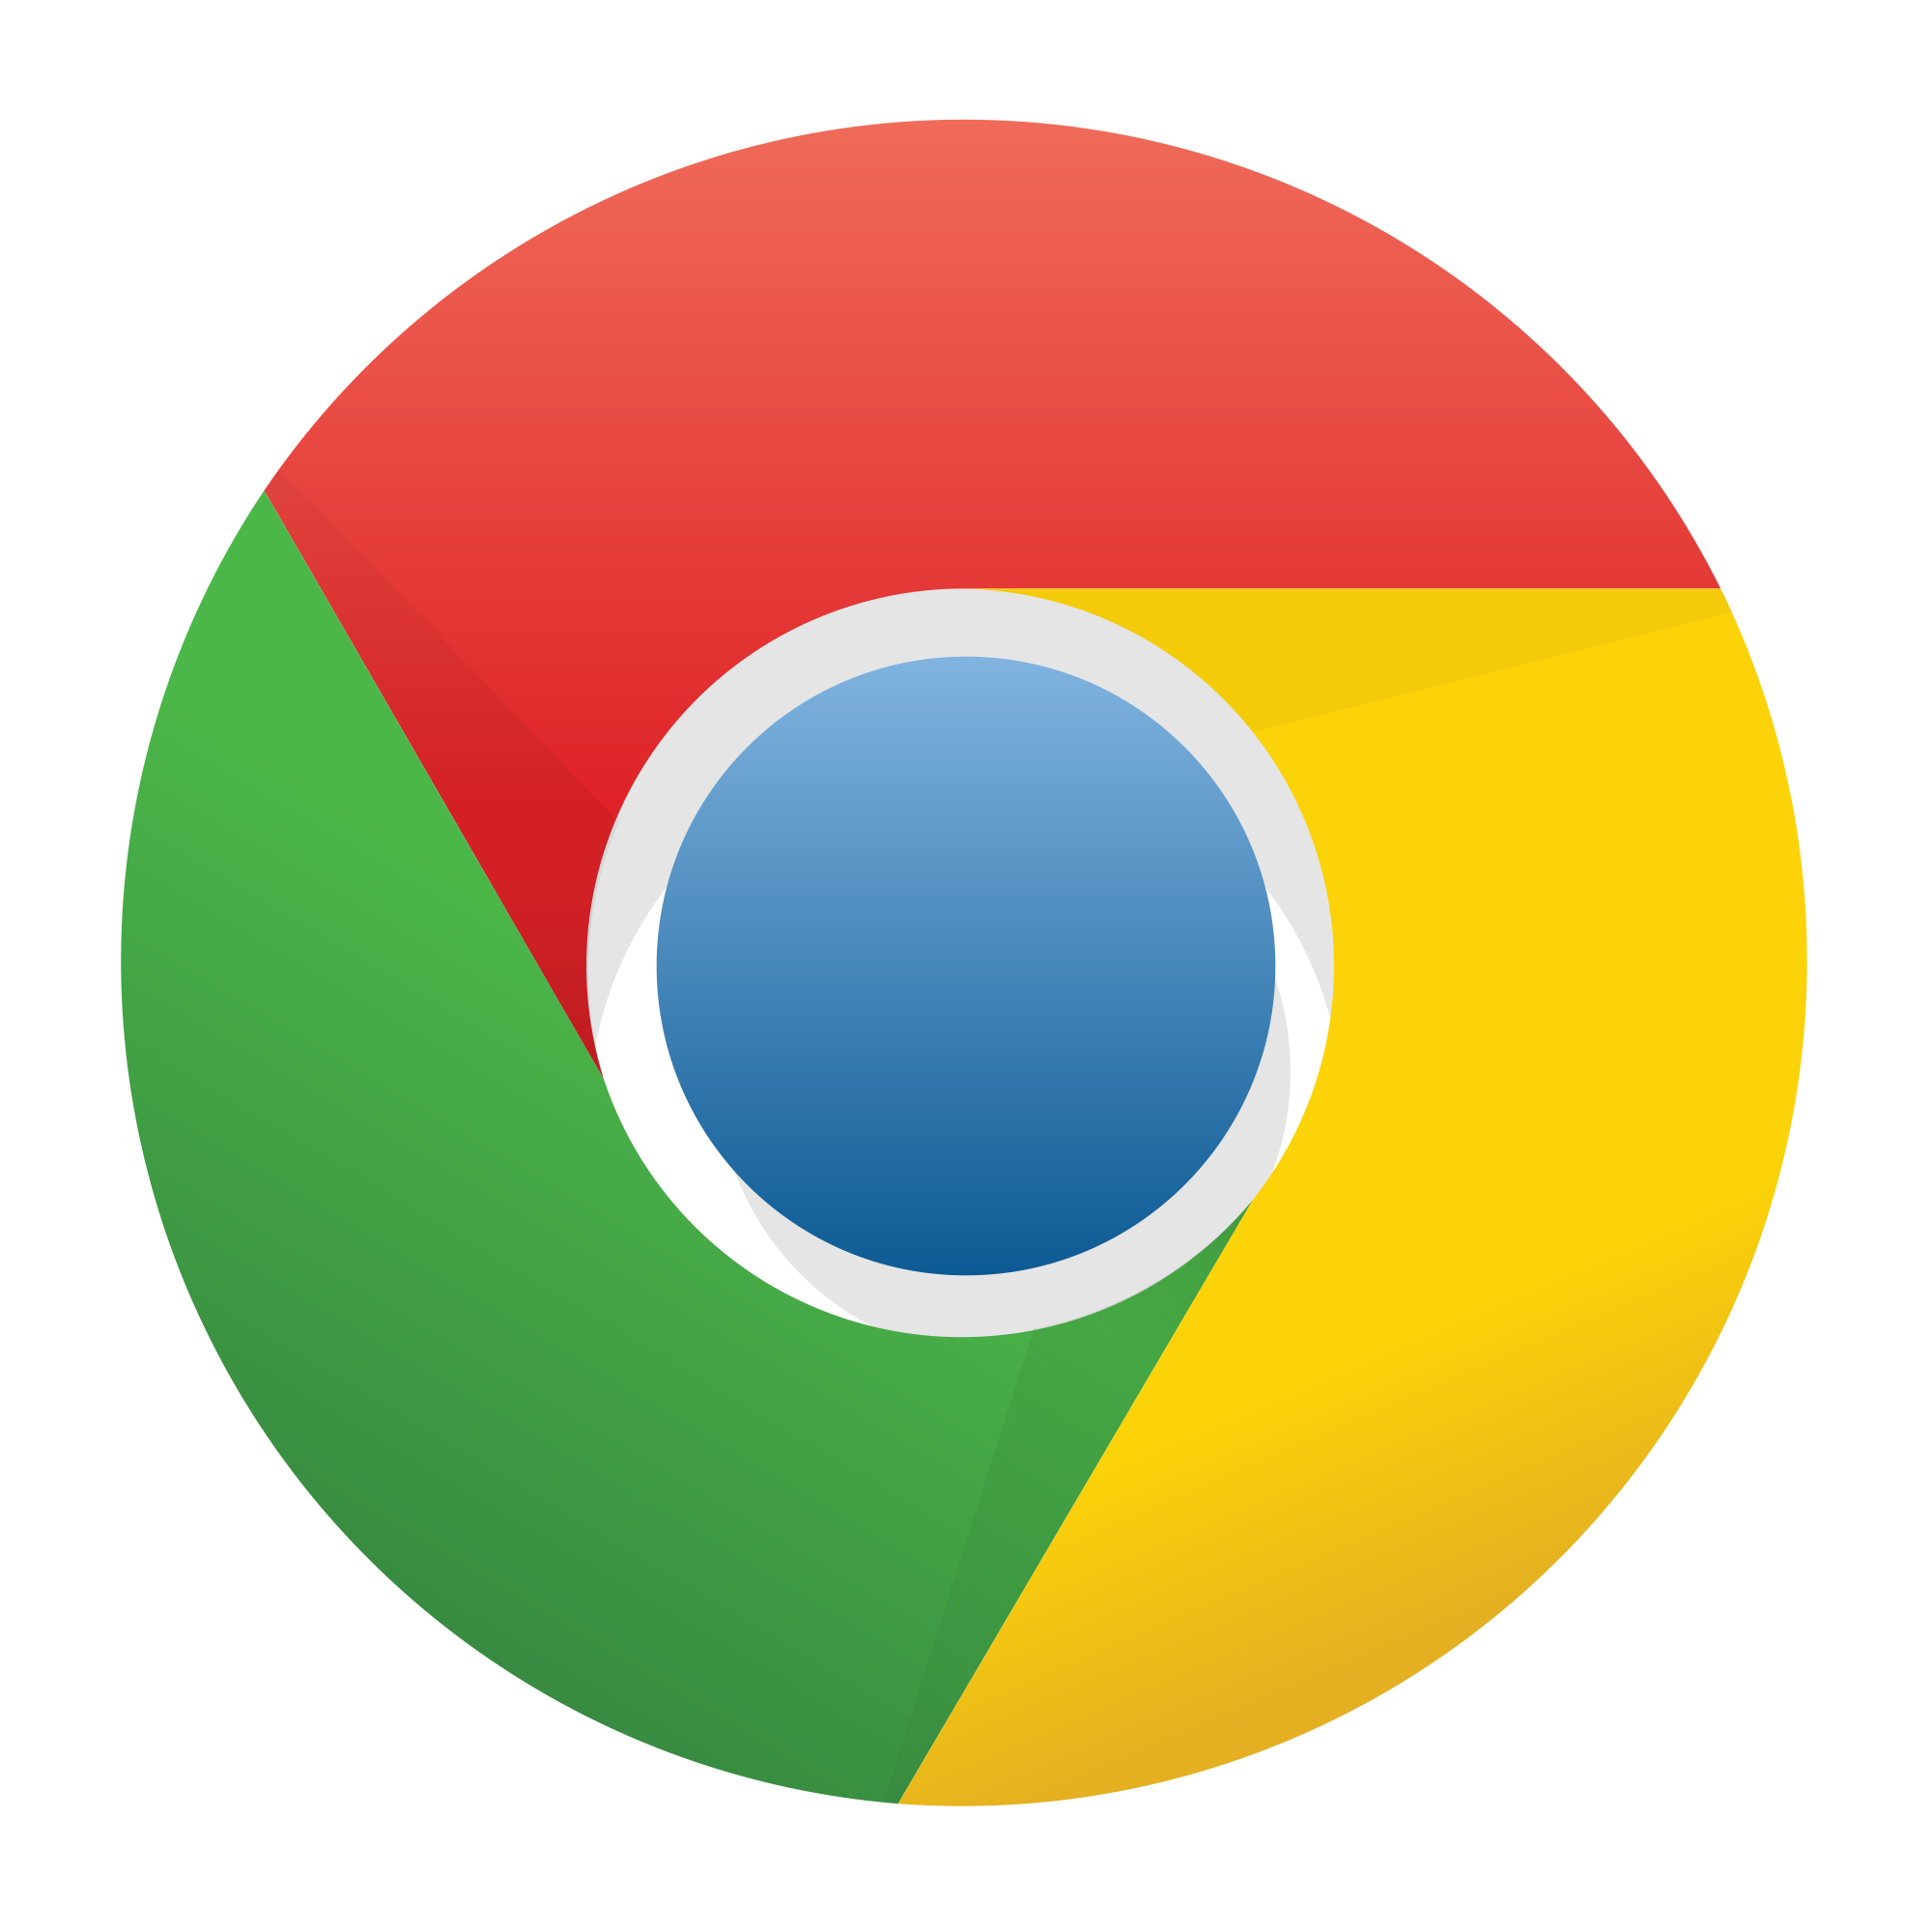 Google Chrome Logo PNG Clipart